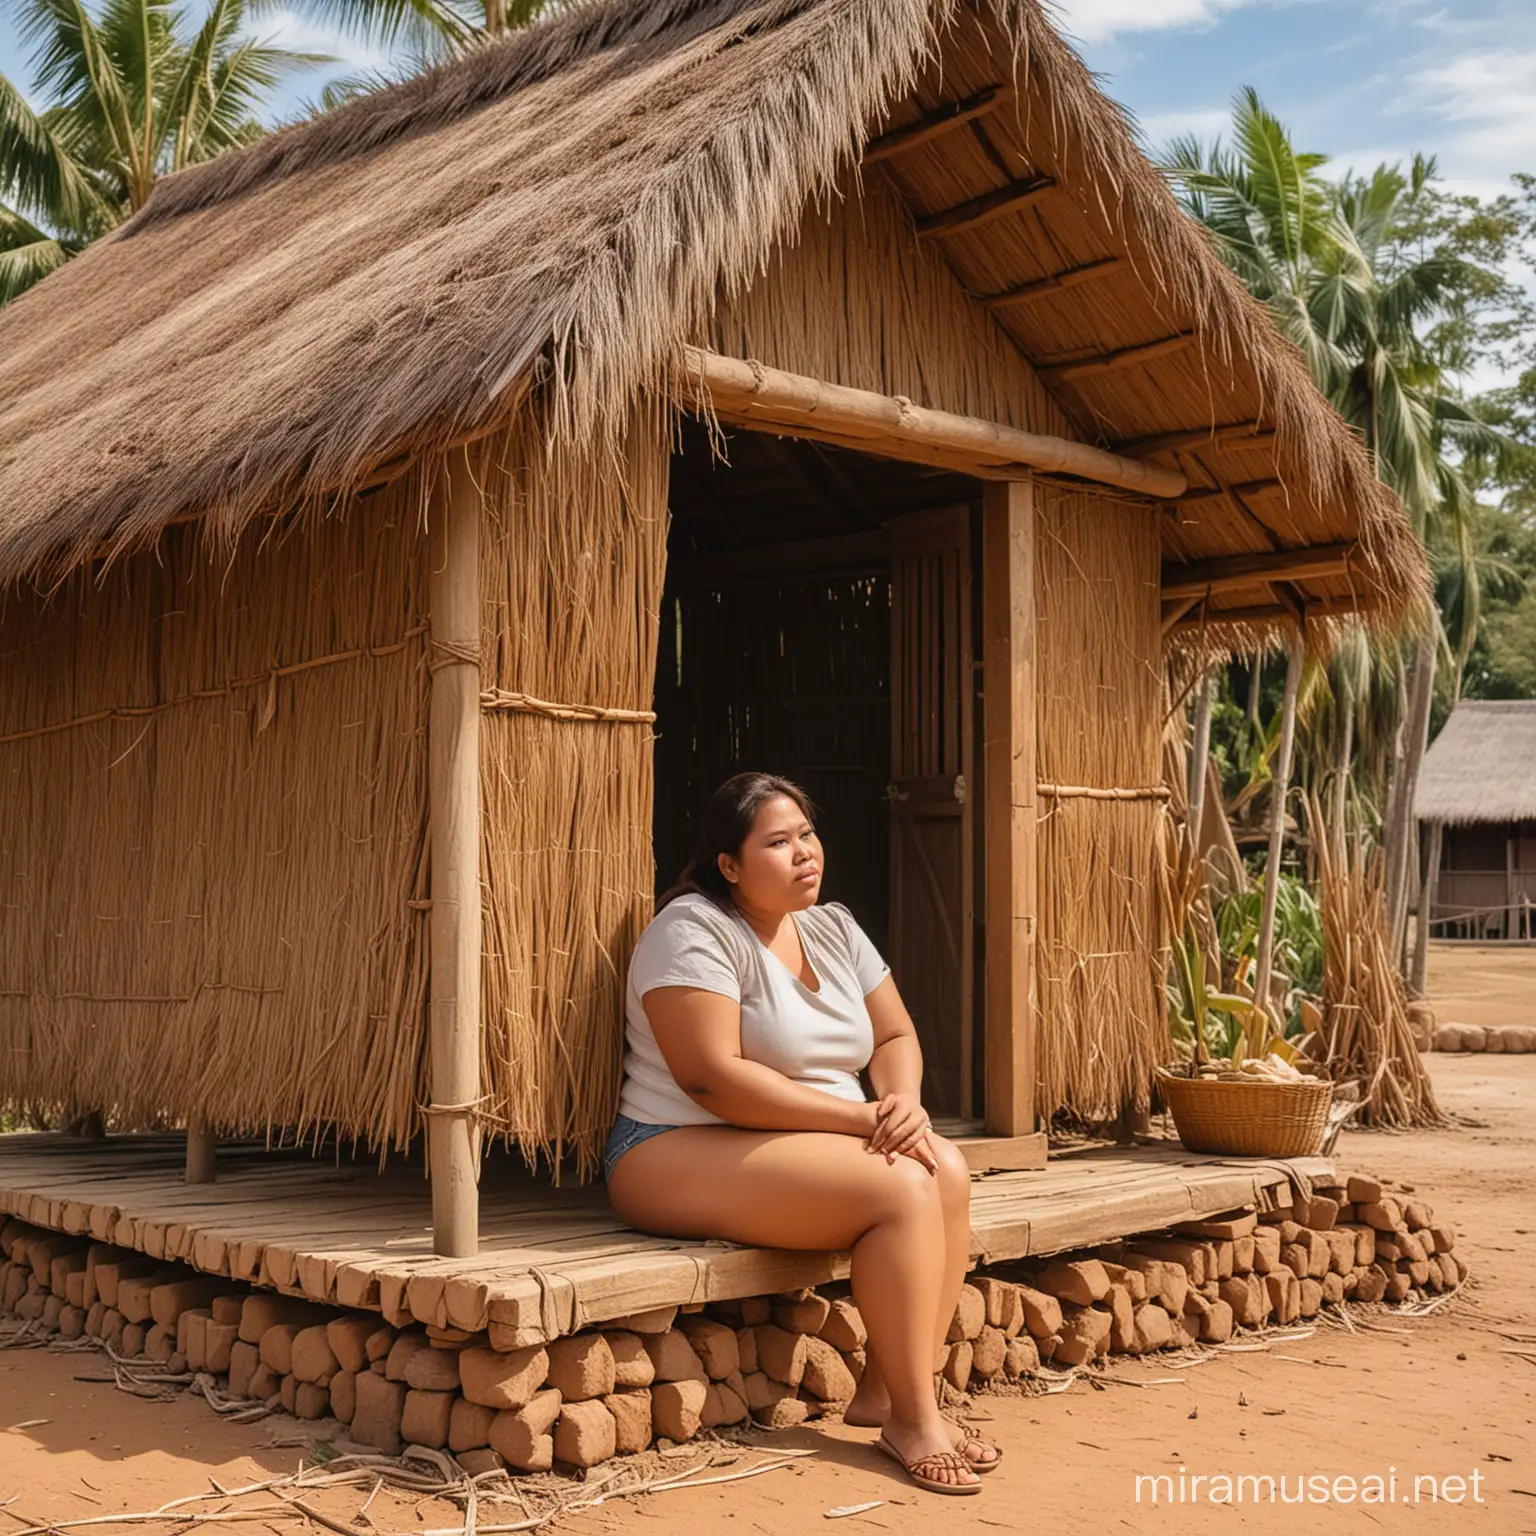 Filipino Woman in Contemplation Amidst Arid Landscape